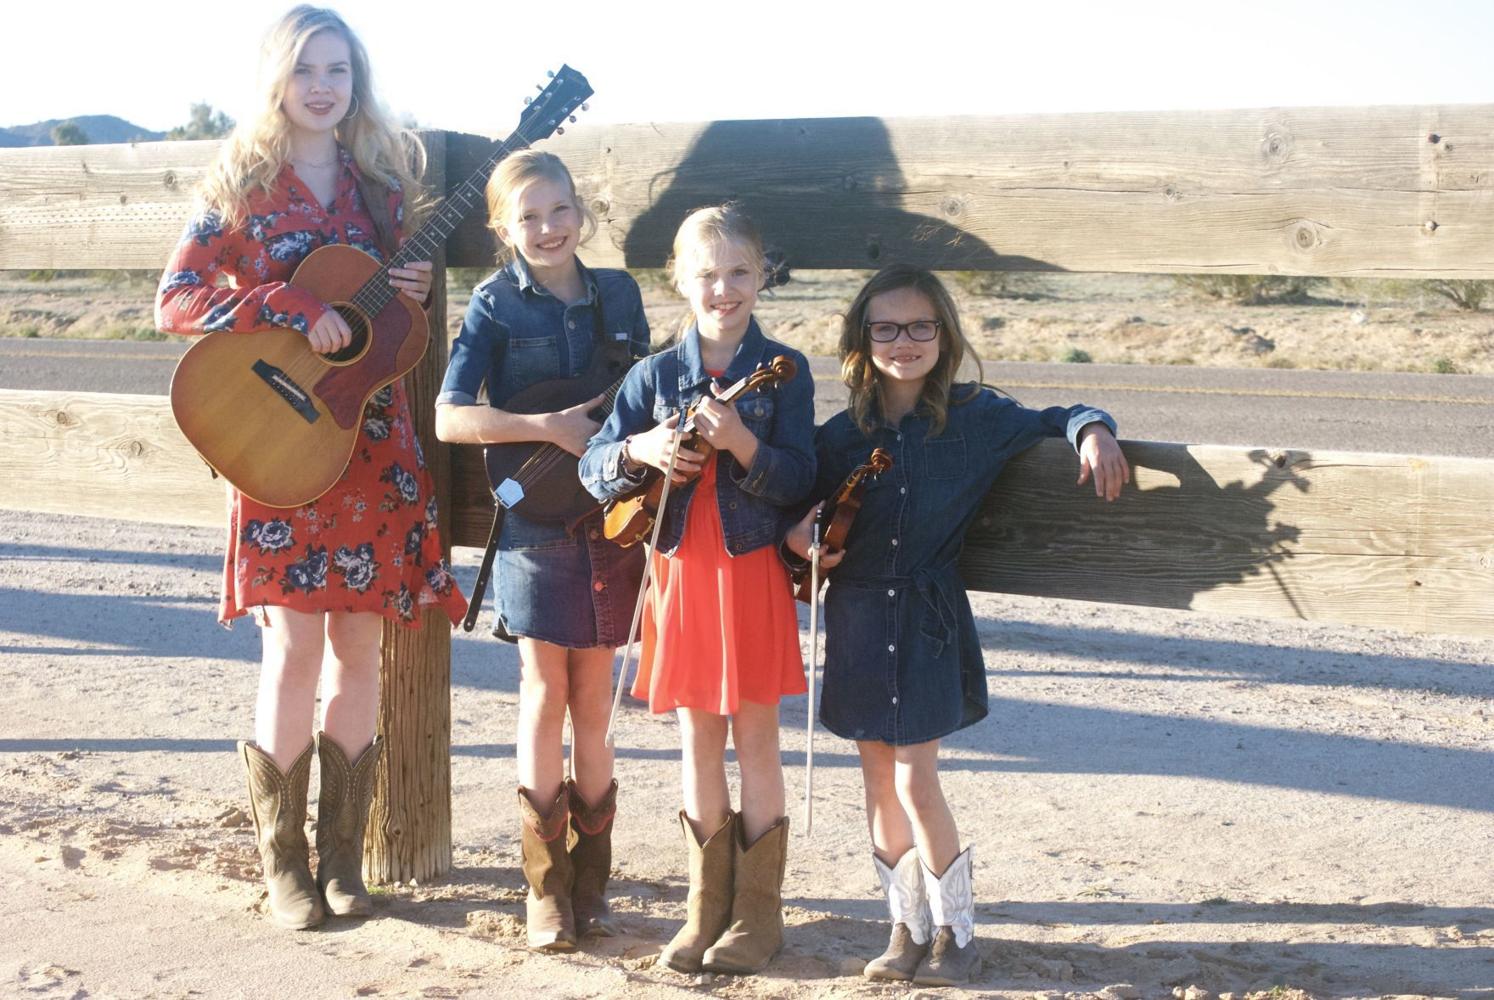 Casa Grande's Arizona Wildflowers to perform at bluegrass festival